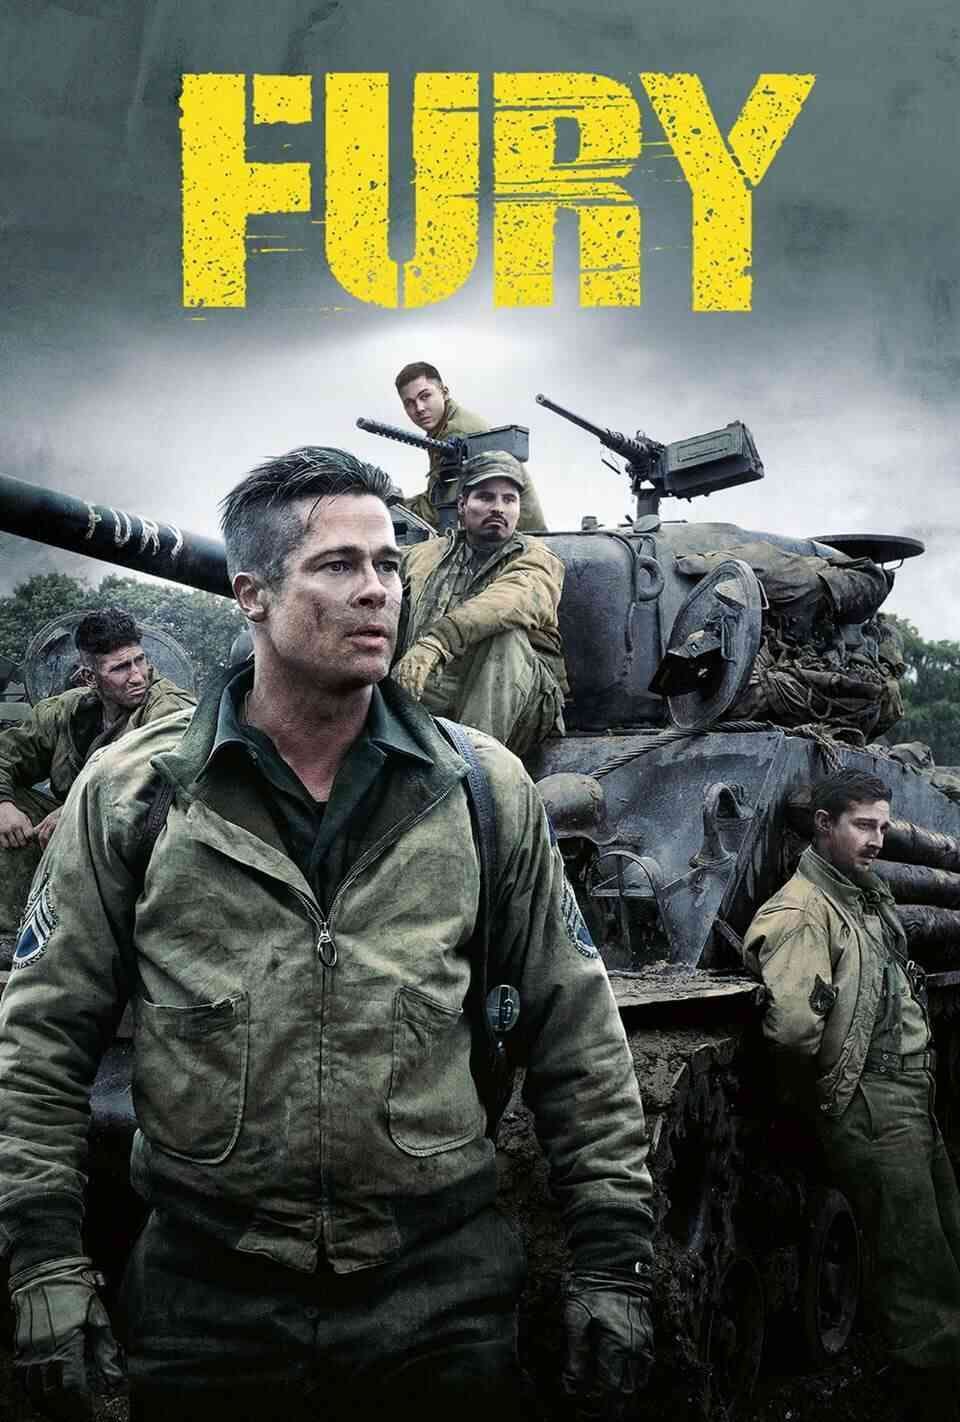 Read Fury screenplay (poster)